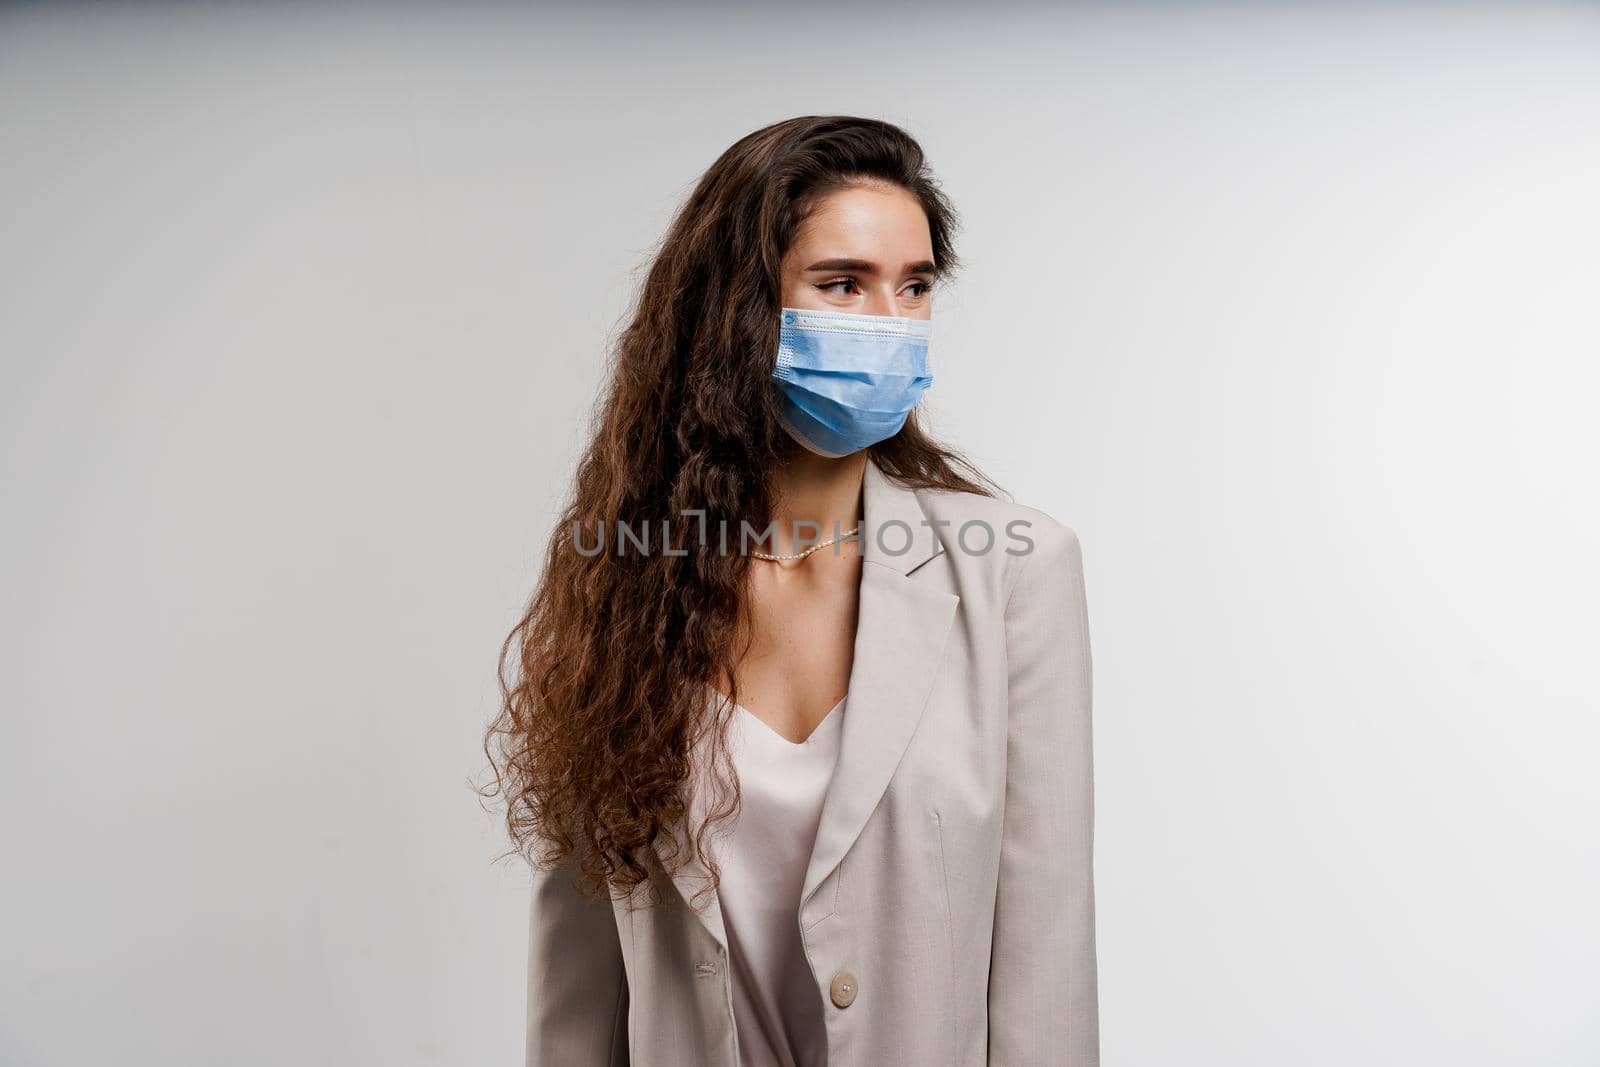 Girl in medical mask isolated on white background. Coronavirus covid-19 quarantine concept.